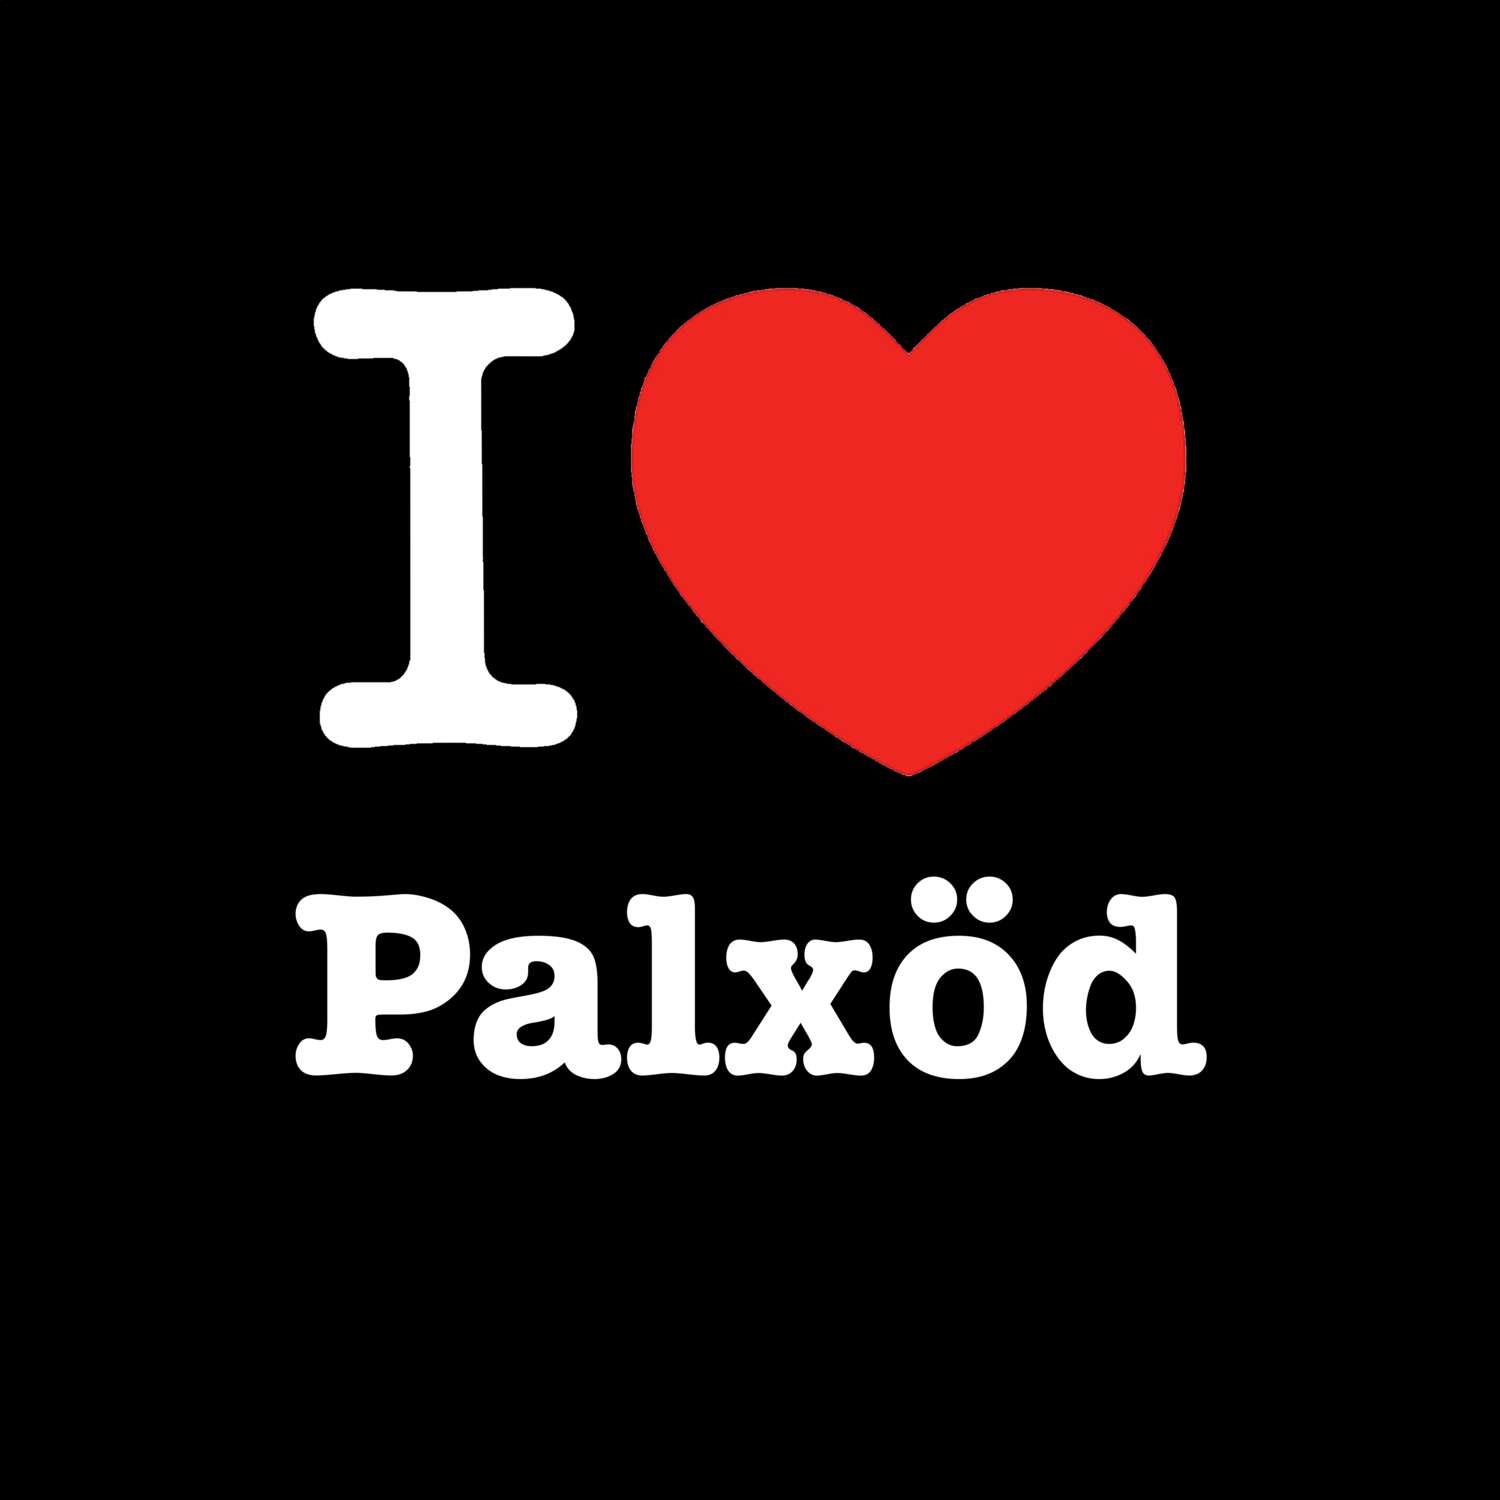 Palxöd T-Shirt »I love«